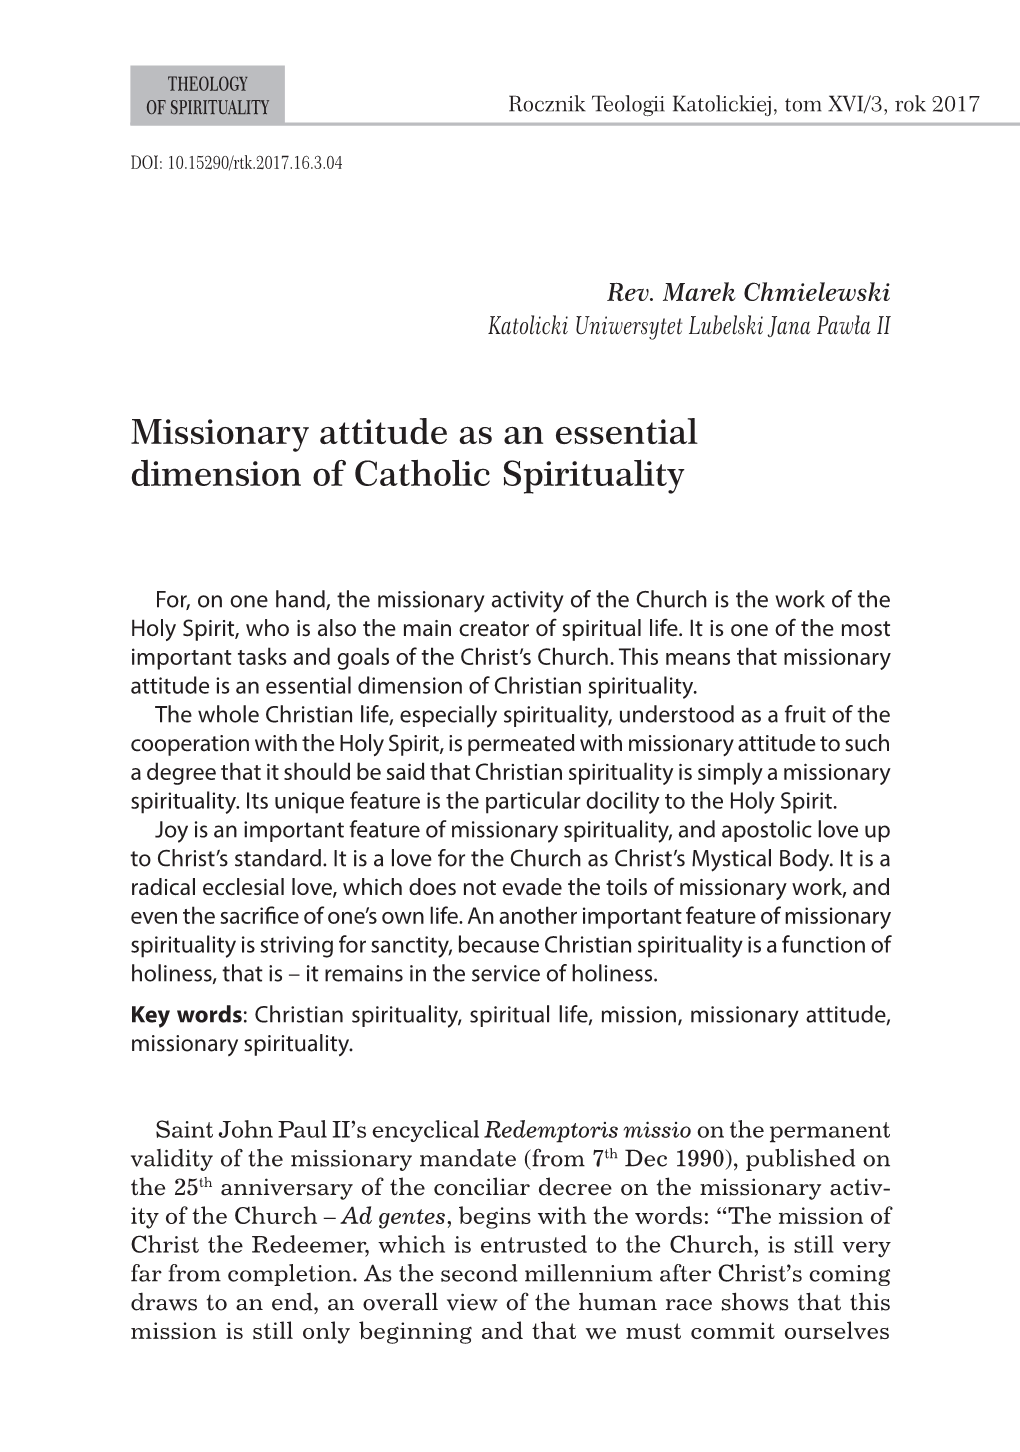 Missionary Attitude As an Essential Dimension of Catholic Spirituality